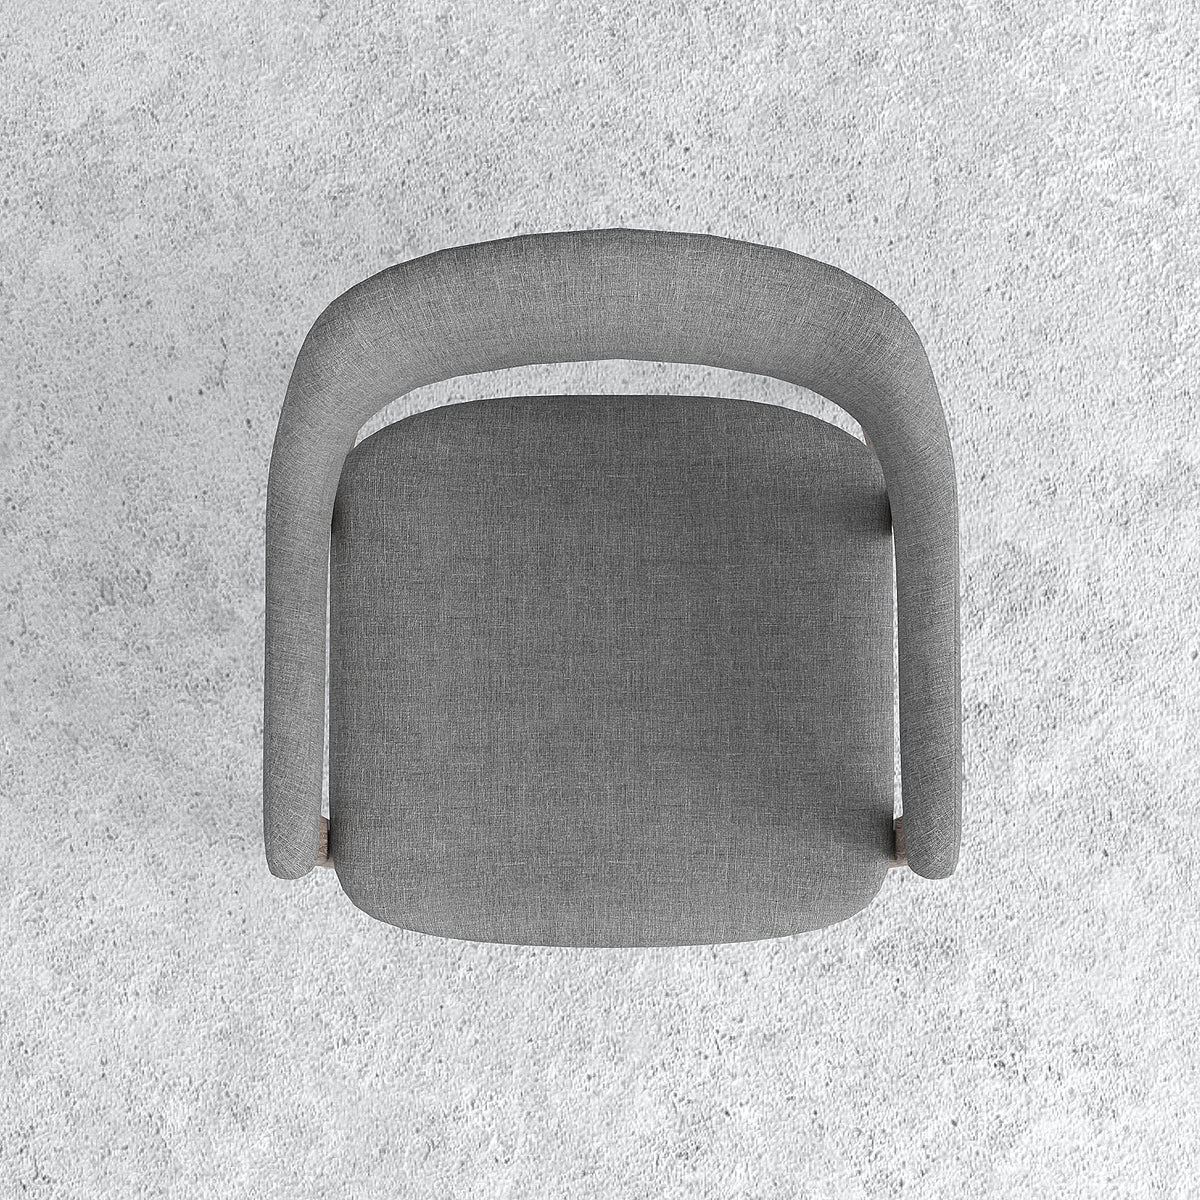 Dylan Dining Chair / Premium Linen